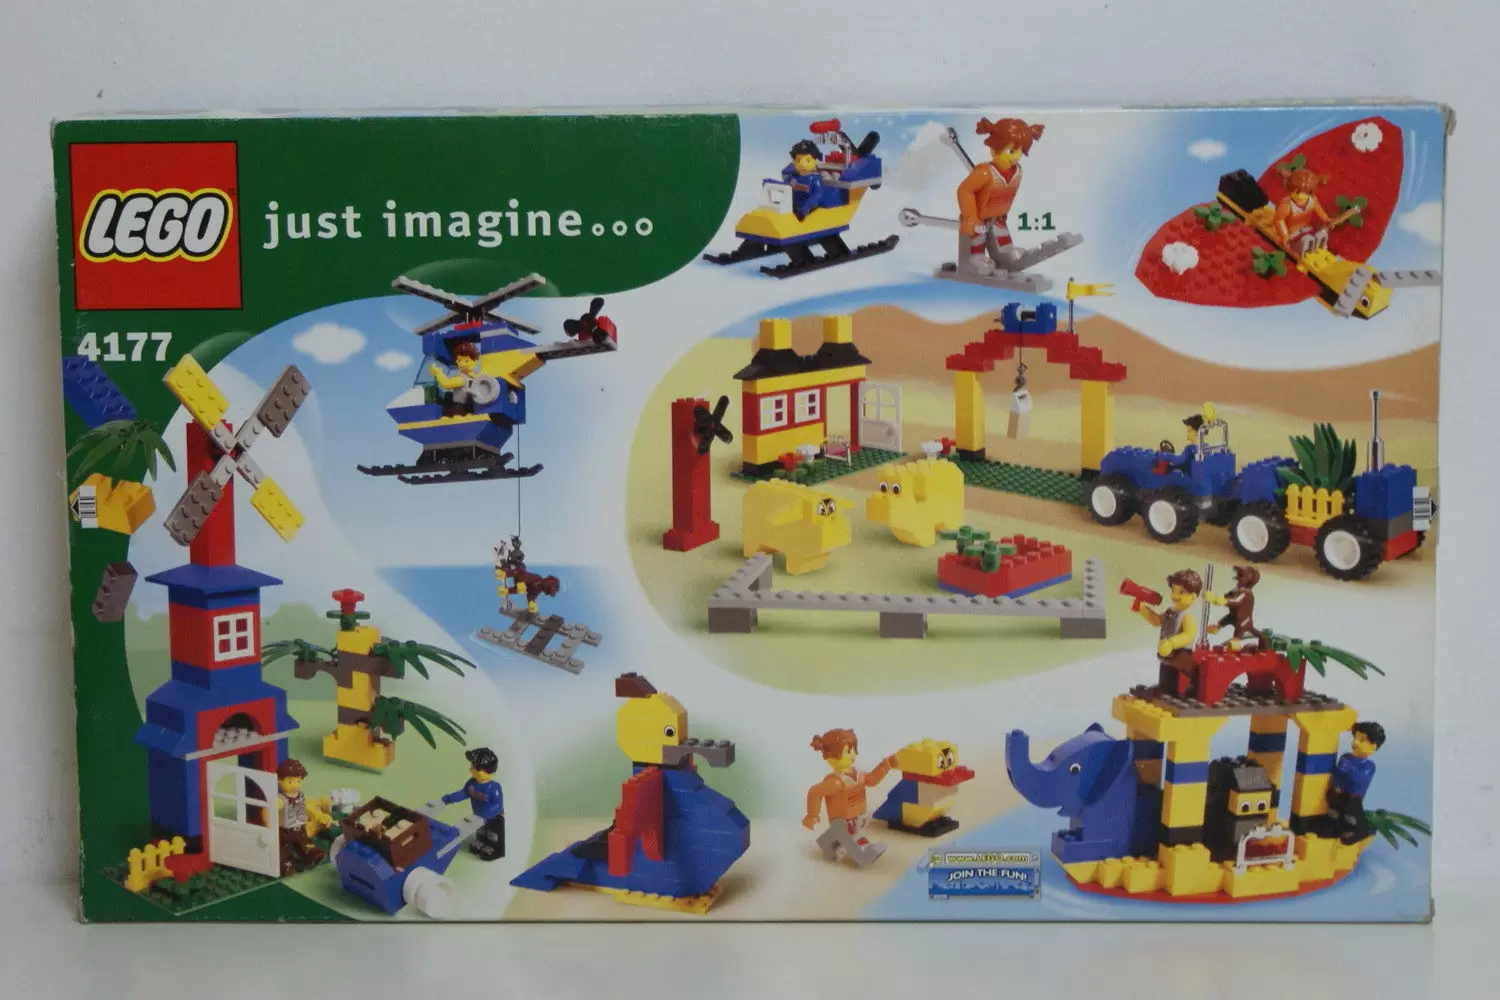 Stories Nana - LEGO Creator set